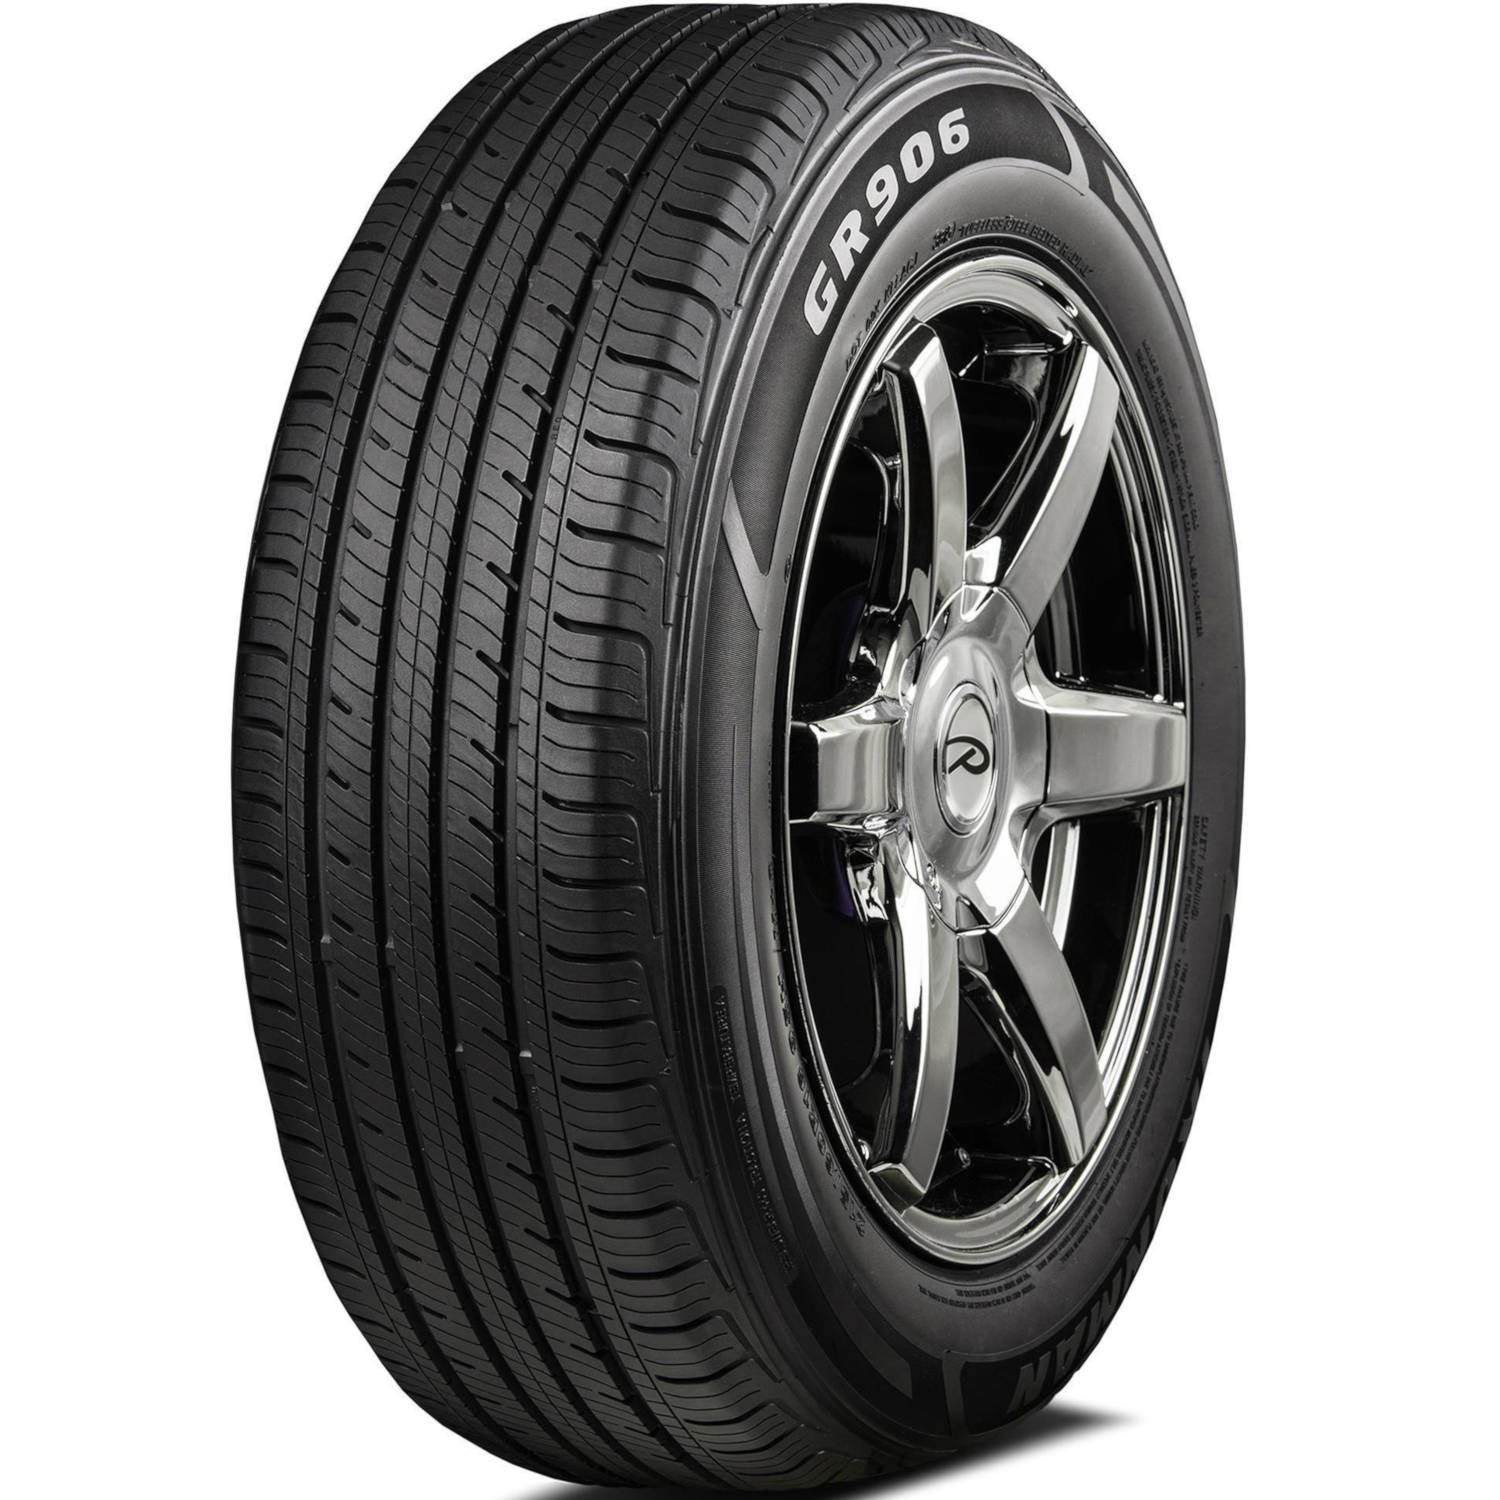 IRONMAN GR906 215/70R15 (26.9X8.5R 15) Tires